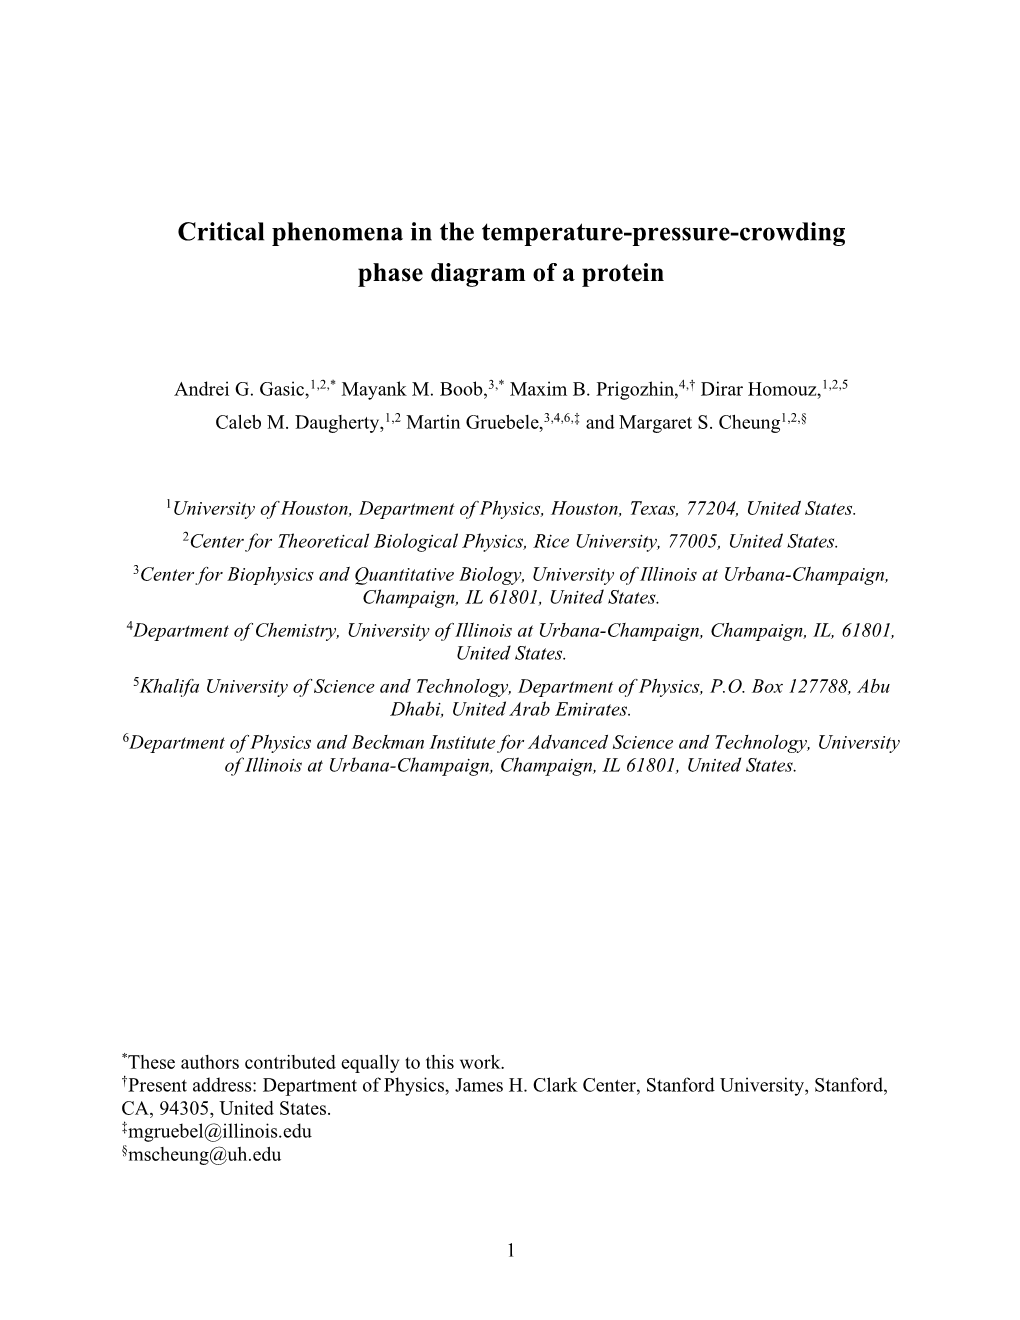 Critical Phenomena in the Temperature-Pressure-Crowding Phase Diagram of a Protein